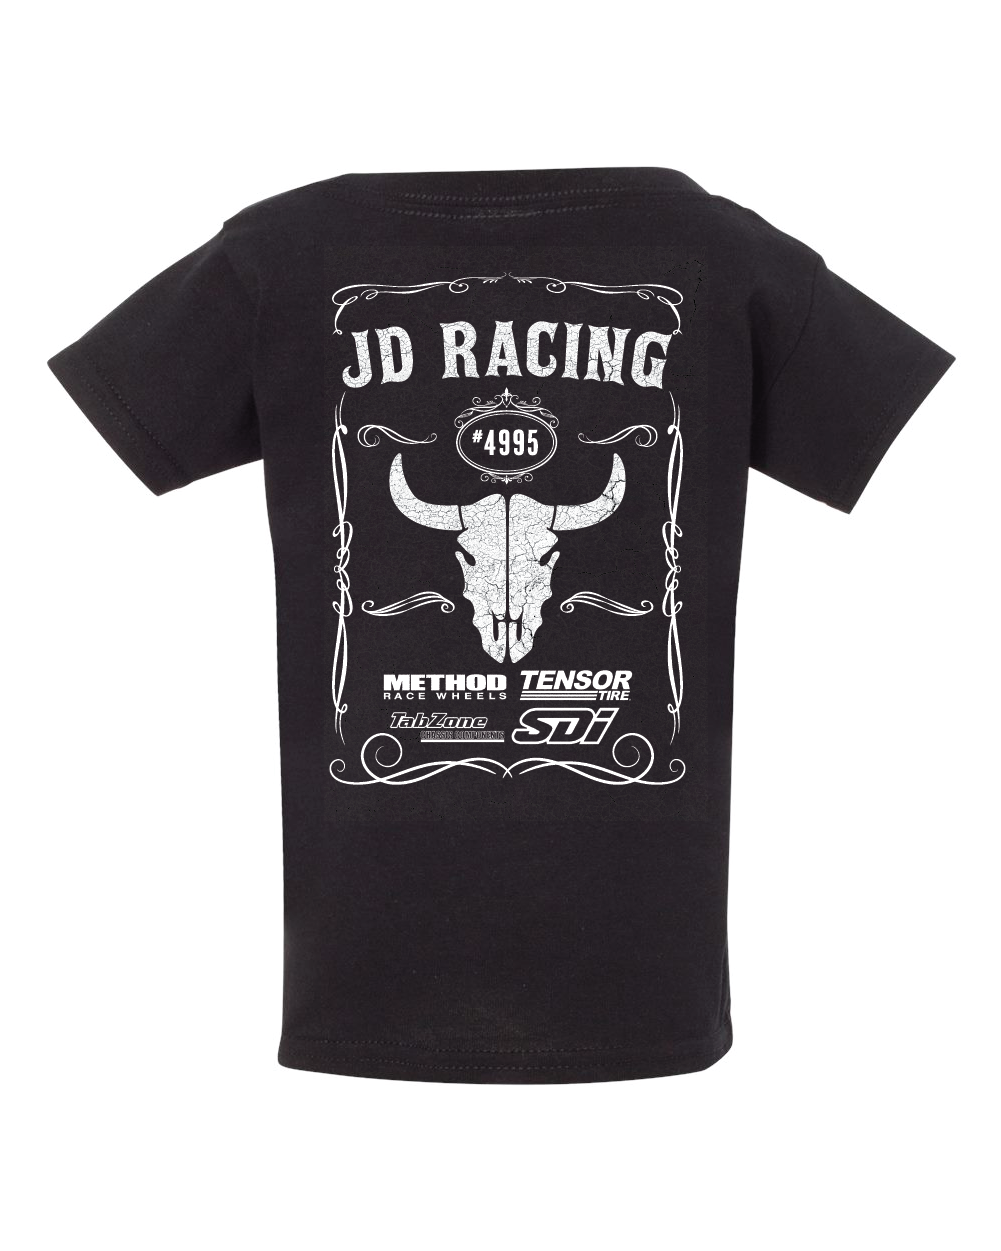 Team JD Racing  #4995